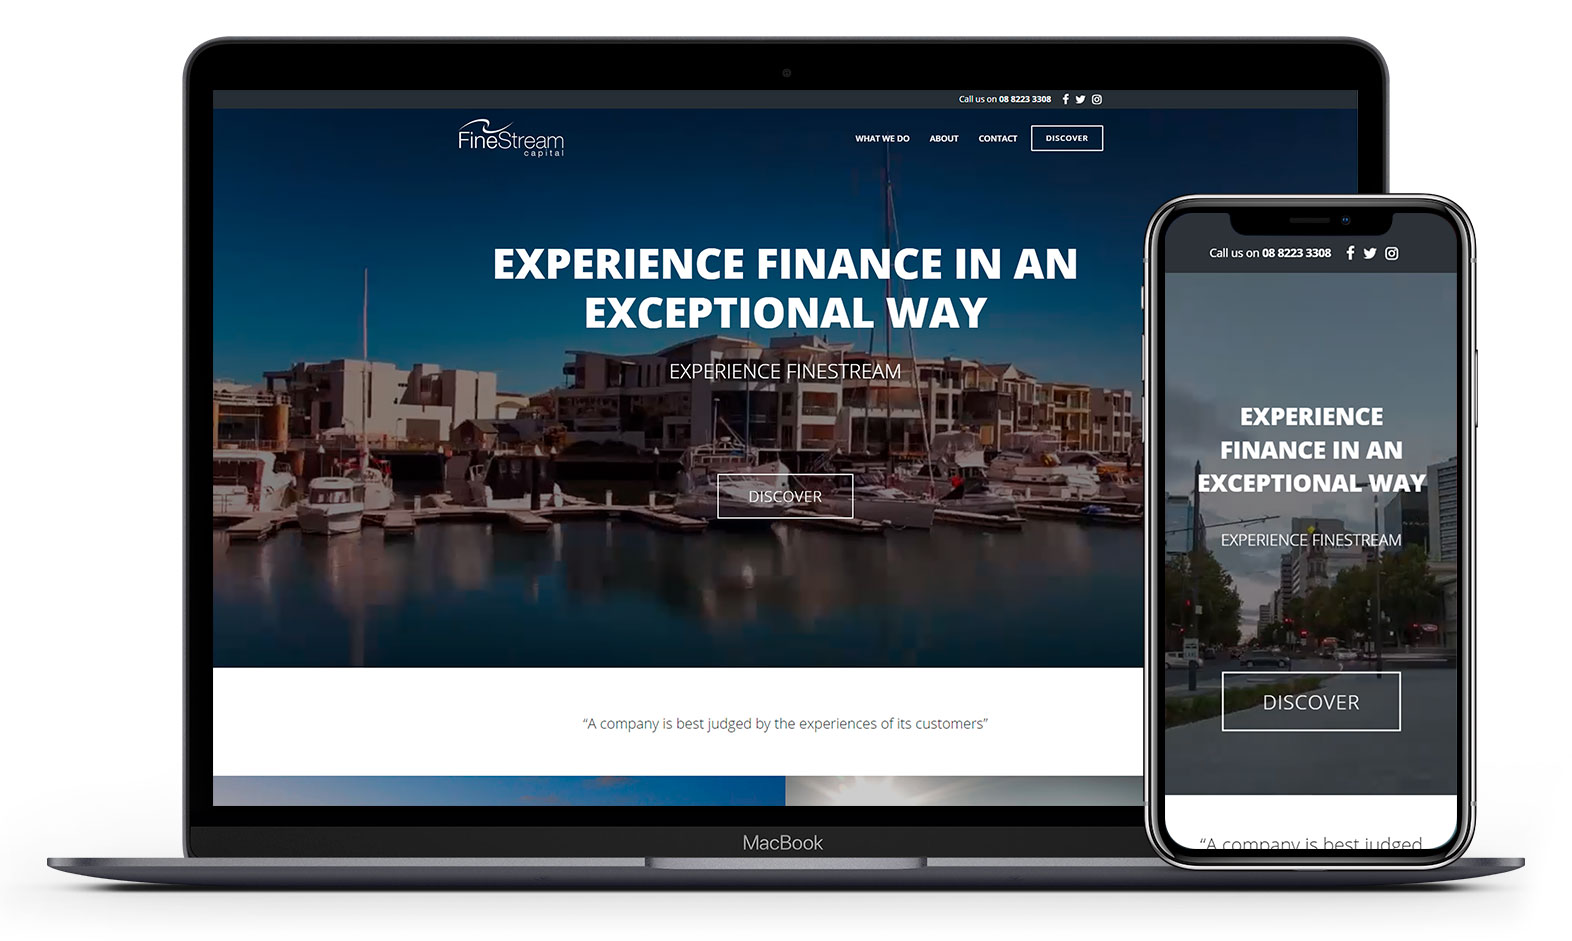 Finestream capital's website design displayed responsive devices